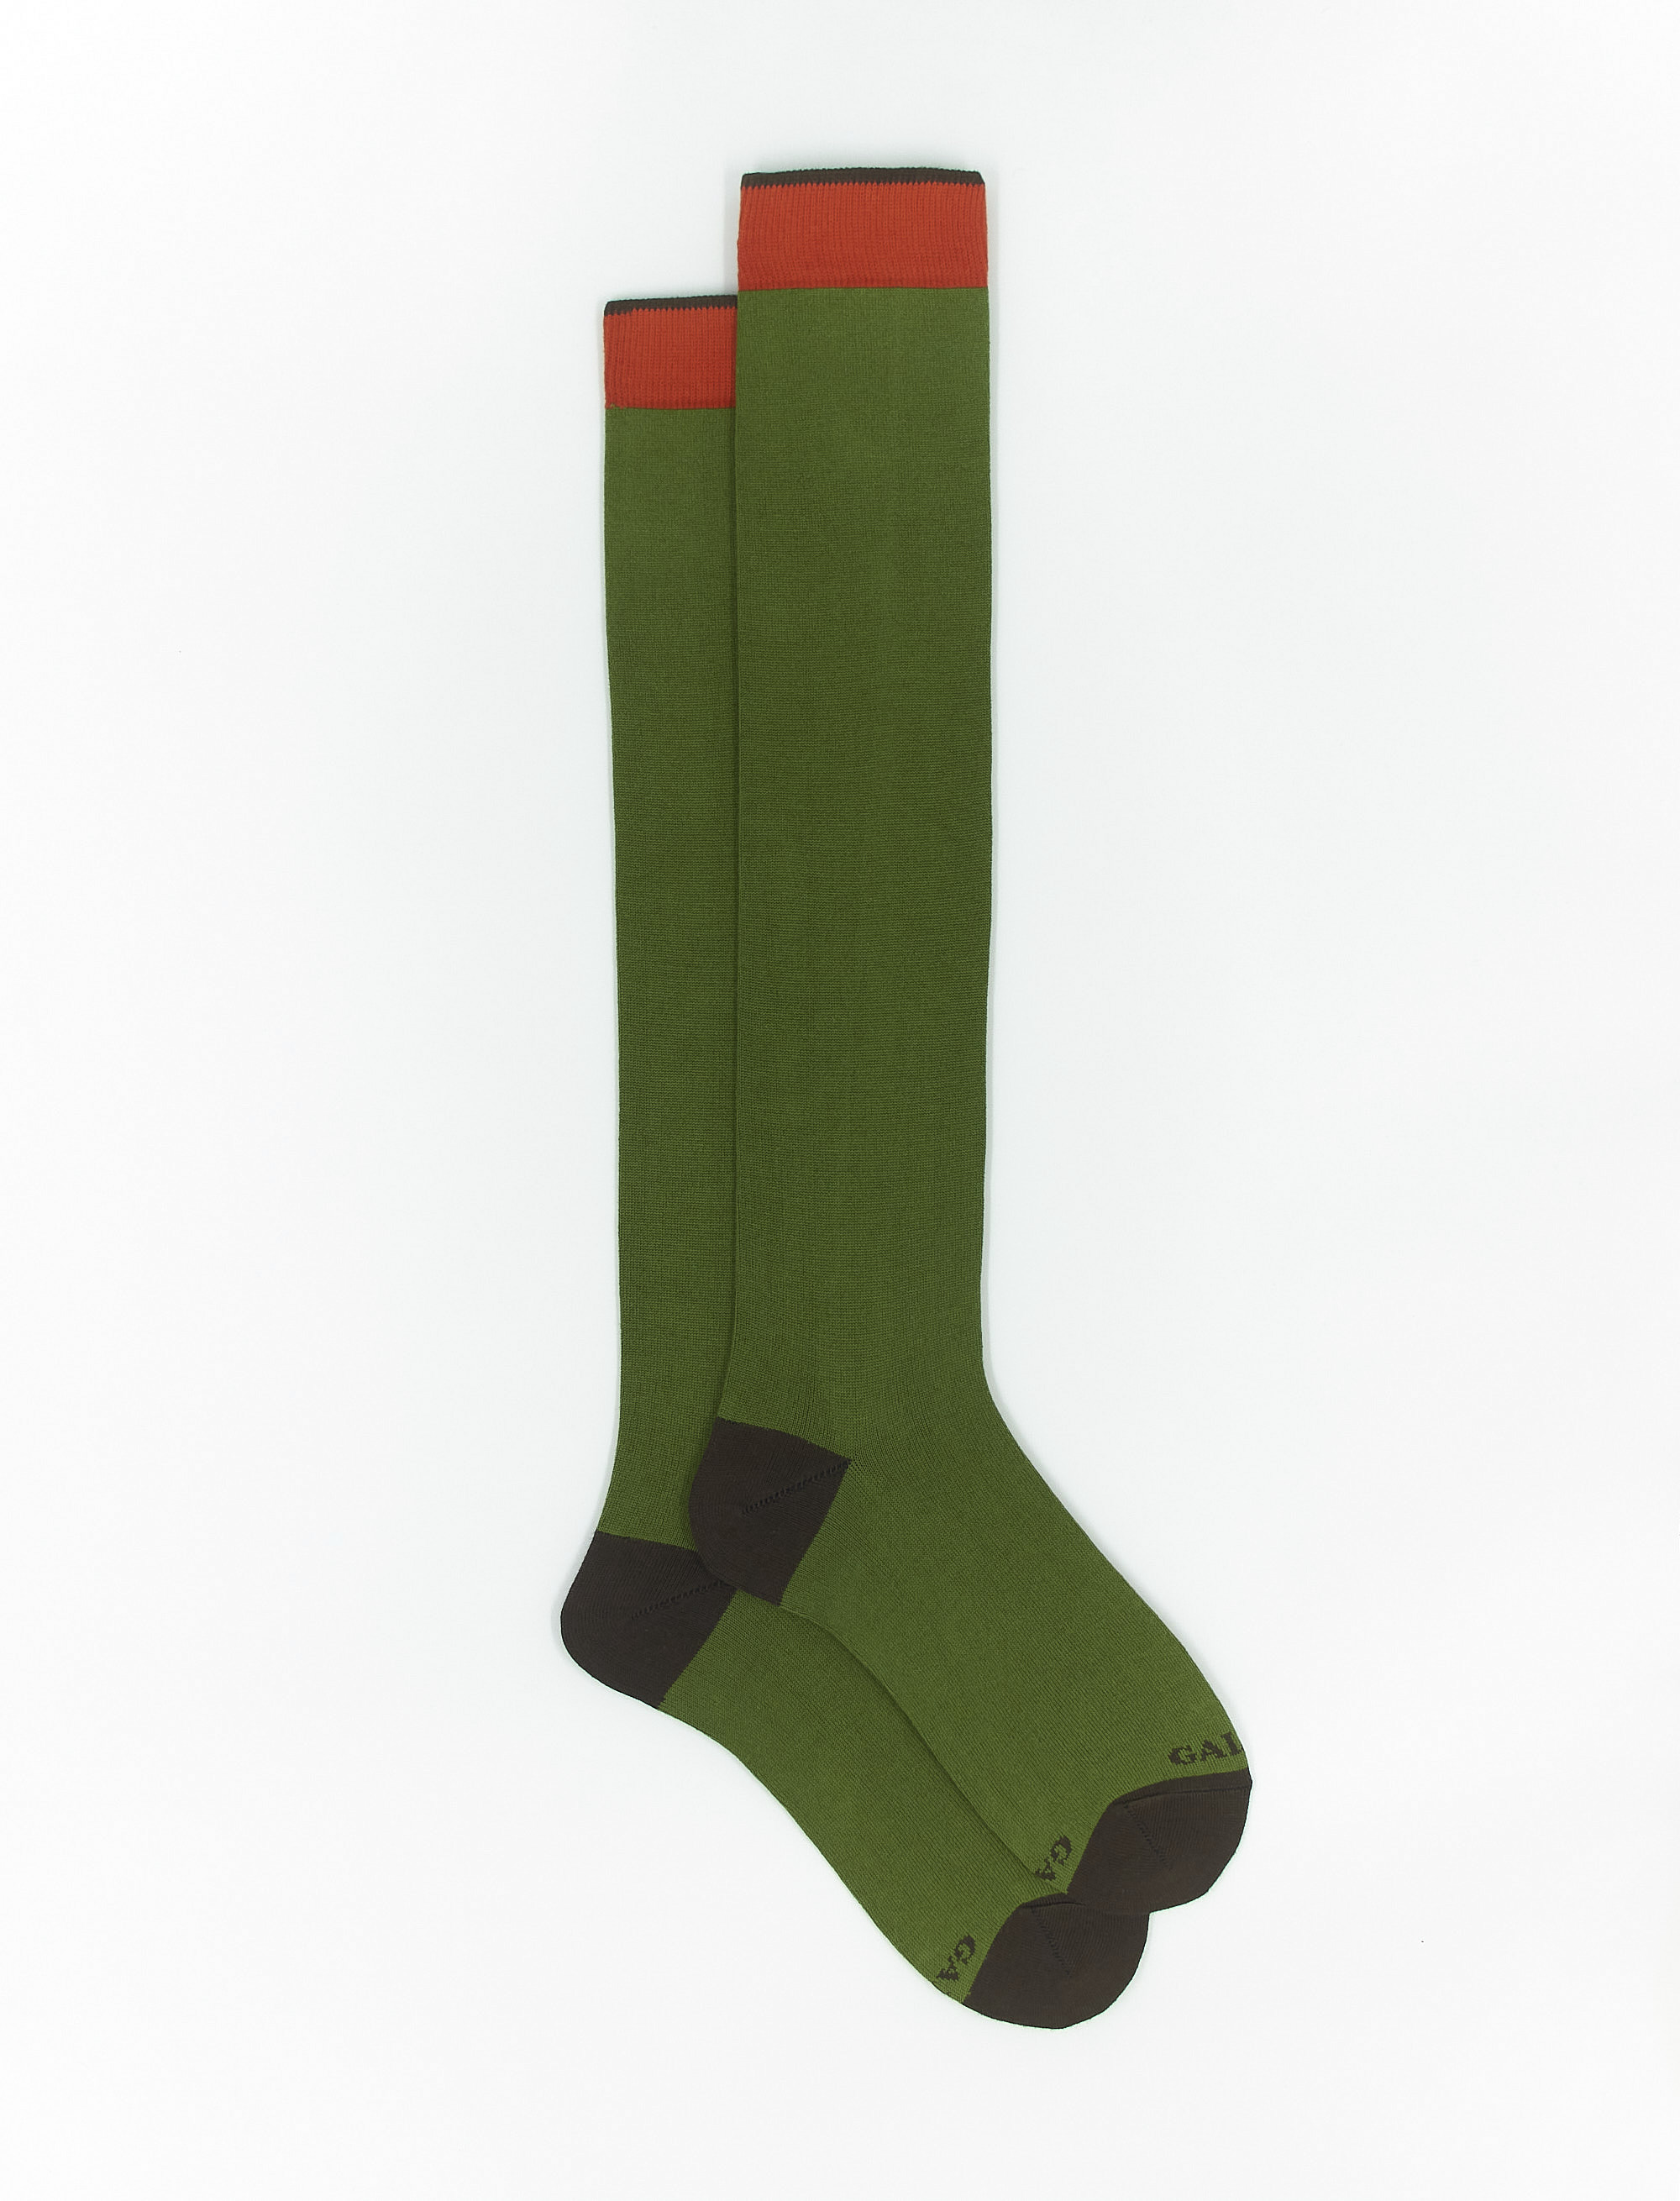 Calze lunghe donna cotone e cashmere verde foglia tinta unita e contrasti - The Essentials | Gallo 1927 - Official Online Shop